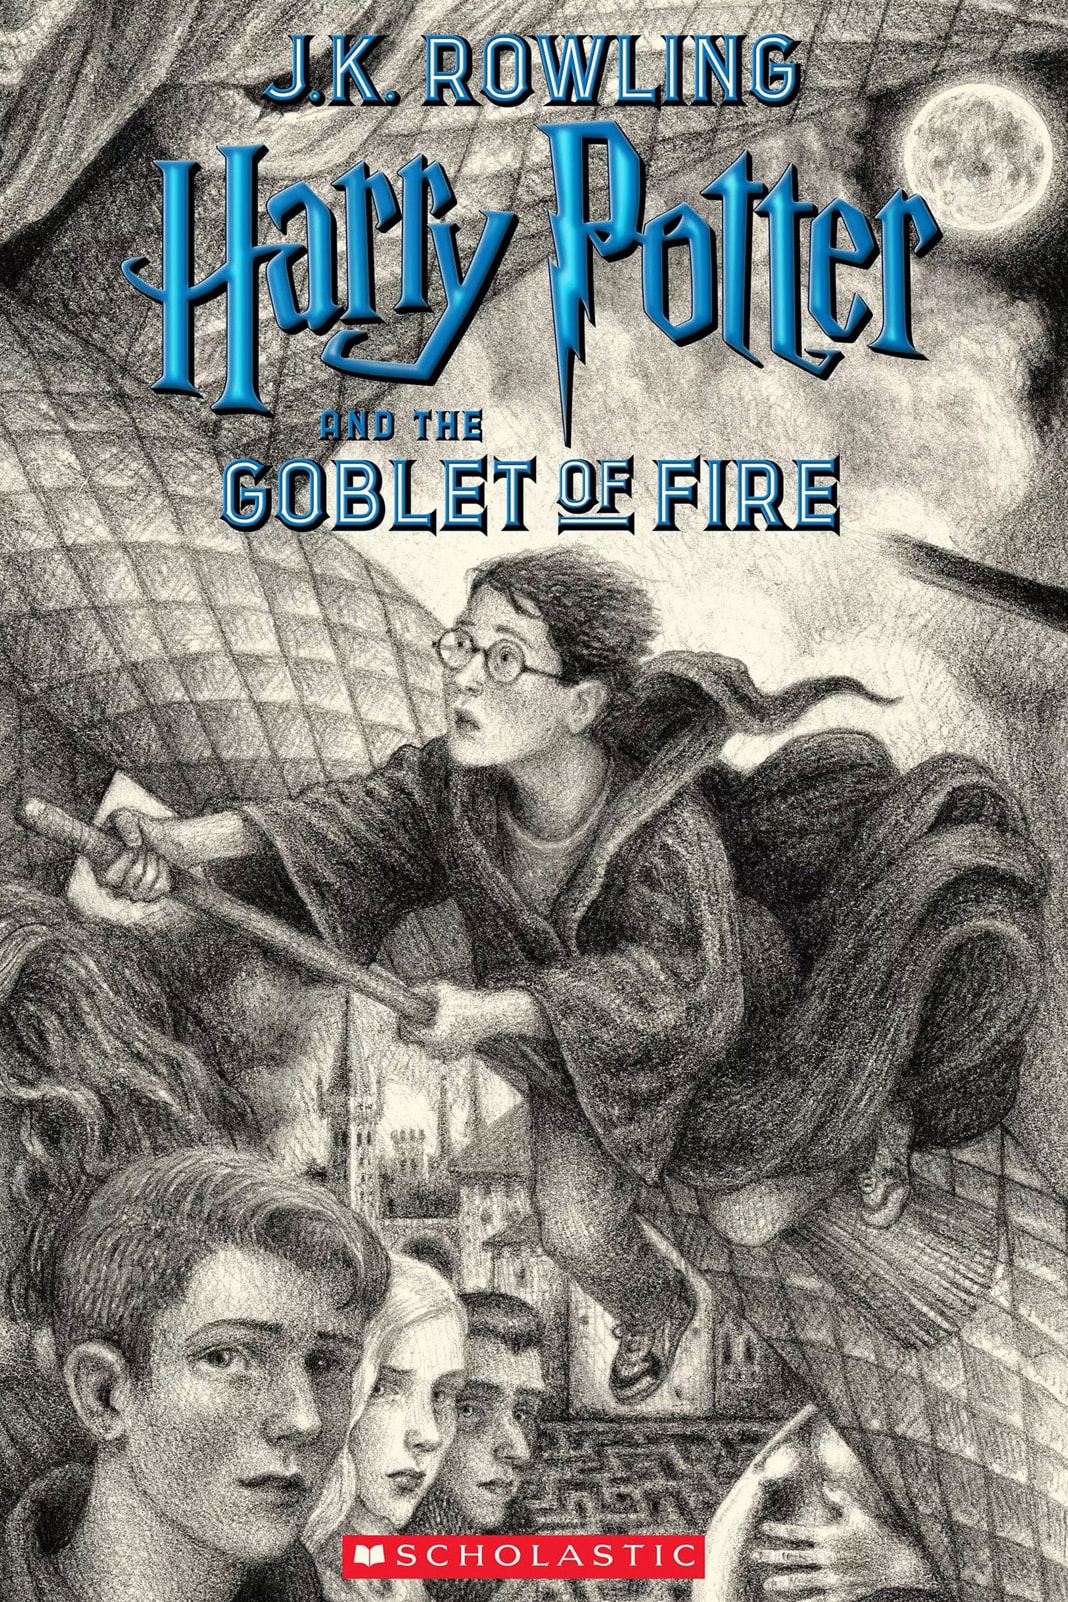 《Harry Potter》20 周年紀念套裝釋